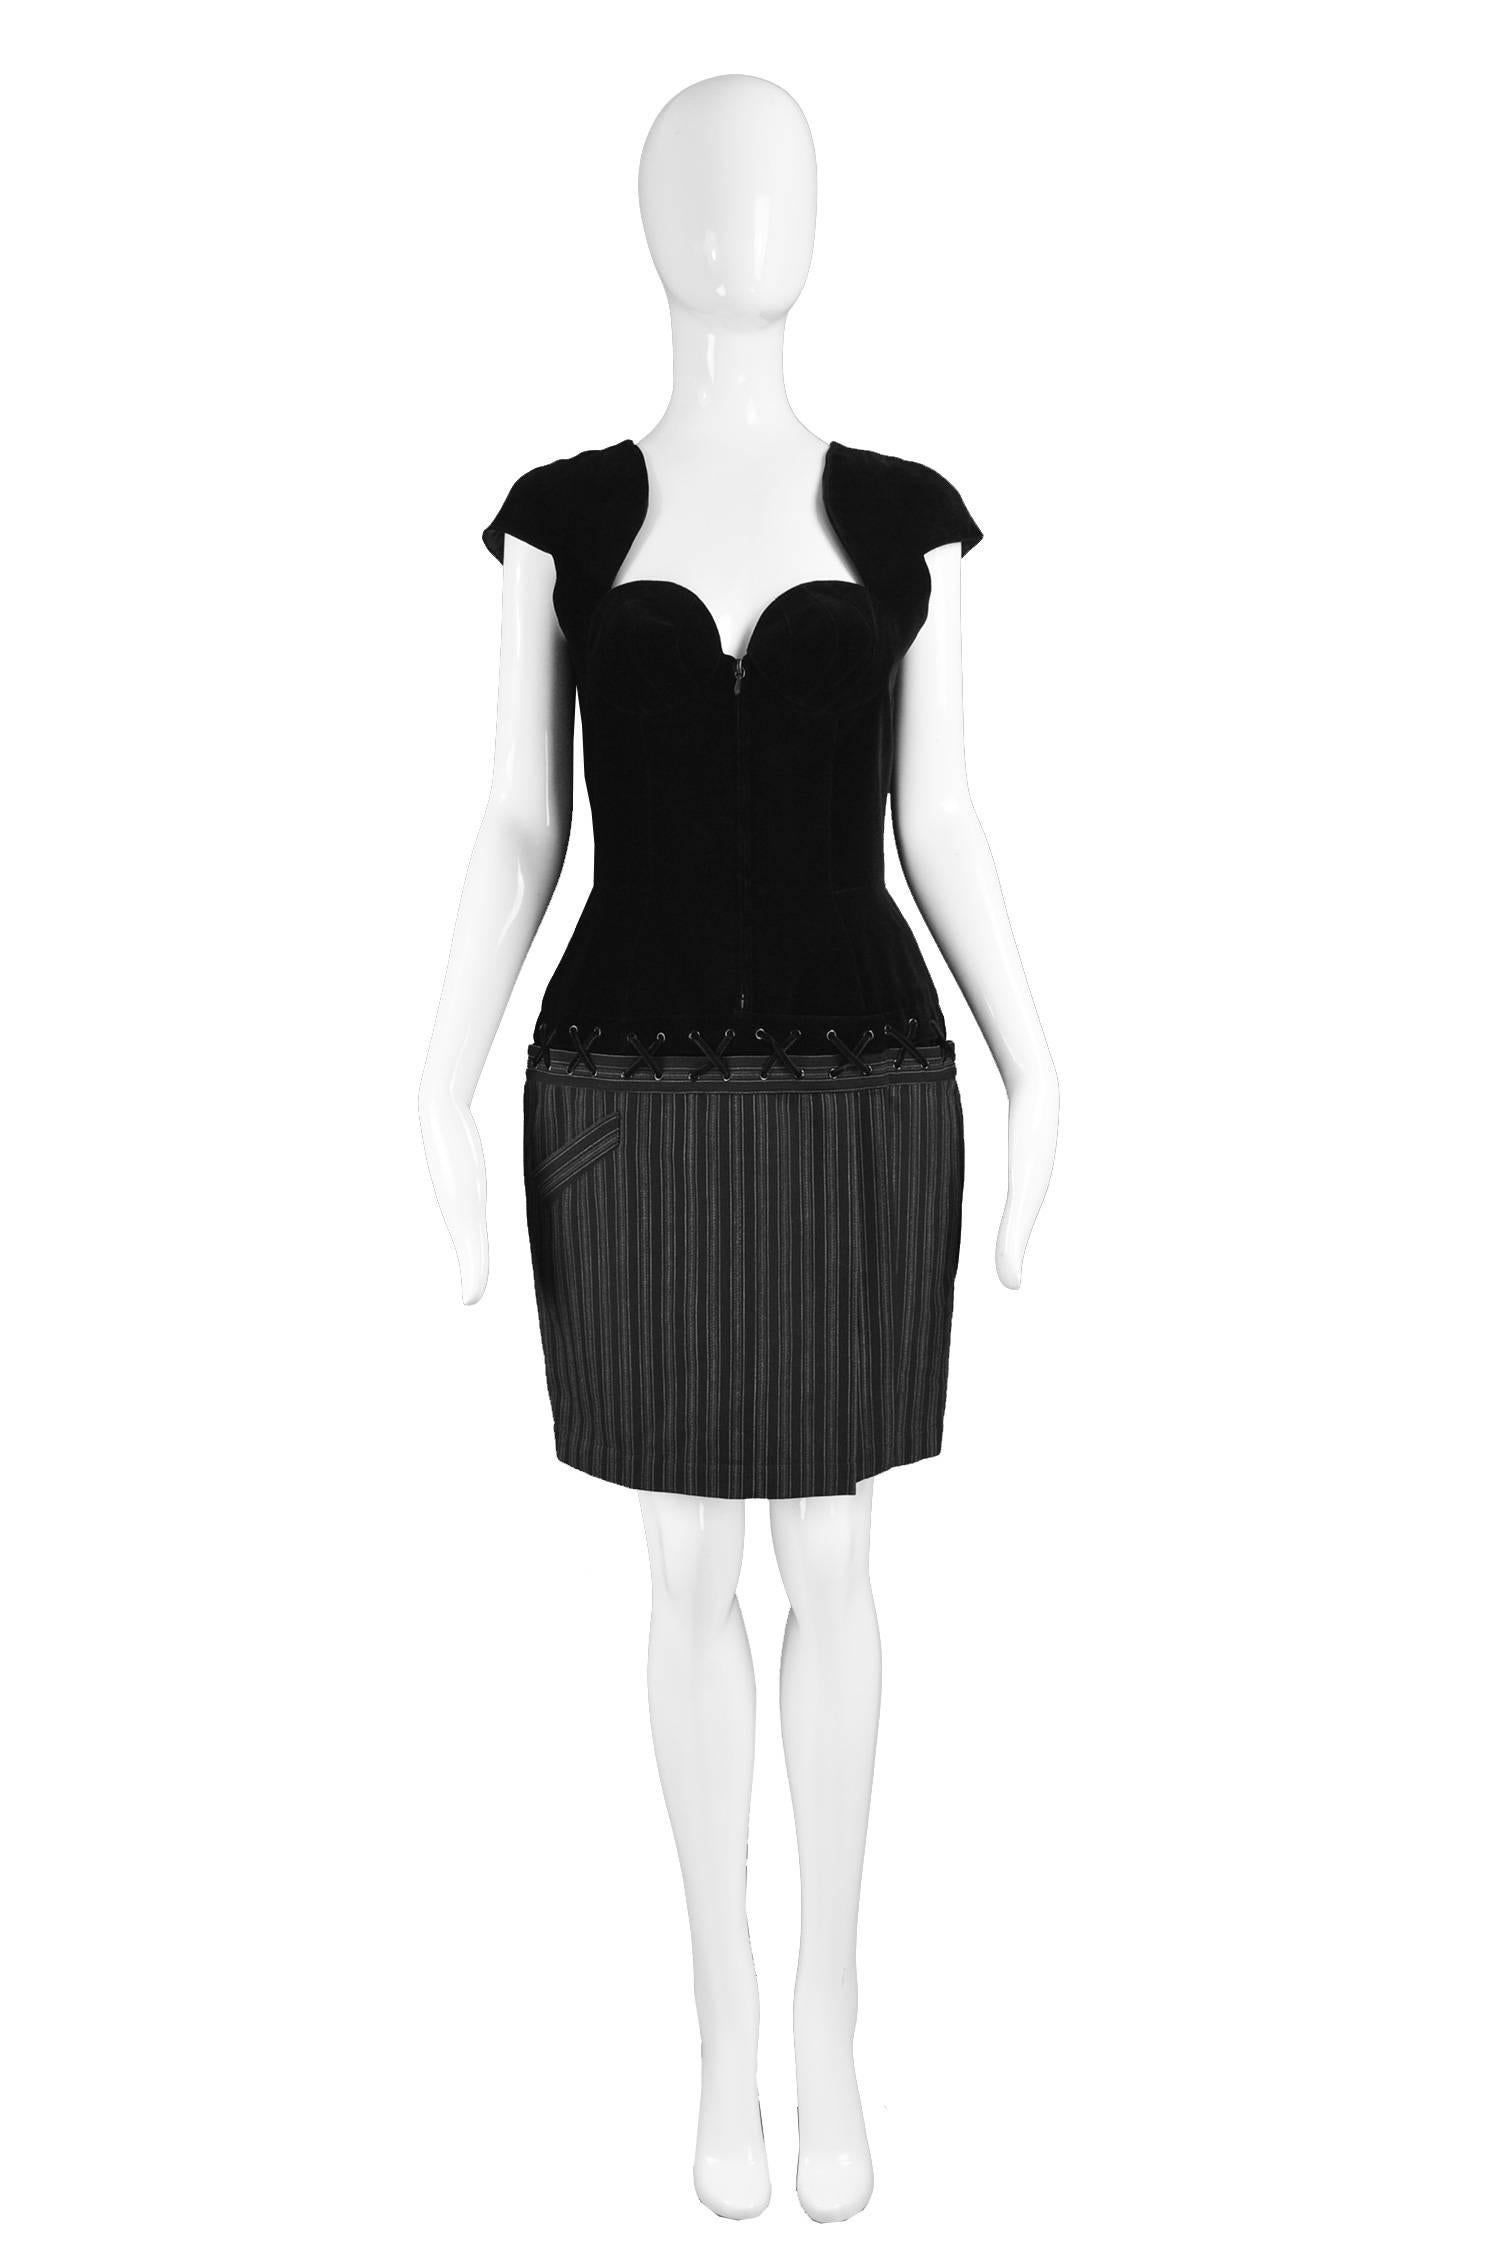 Thierry Mugler Vintage Black Velvet & Striped Wool Corset Style Dress, 1990s

Estimated Size: UK 10-12/ US 6-8/ EU 38-40. Please check measurements.
Bust - 36” / 91cm
Waist - 28” / 71cm
Hips - 38” / 96cm
Length (Shoulder to Hem) - 35” /